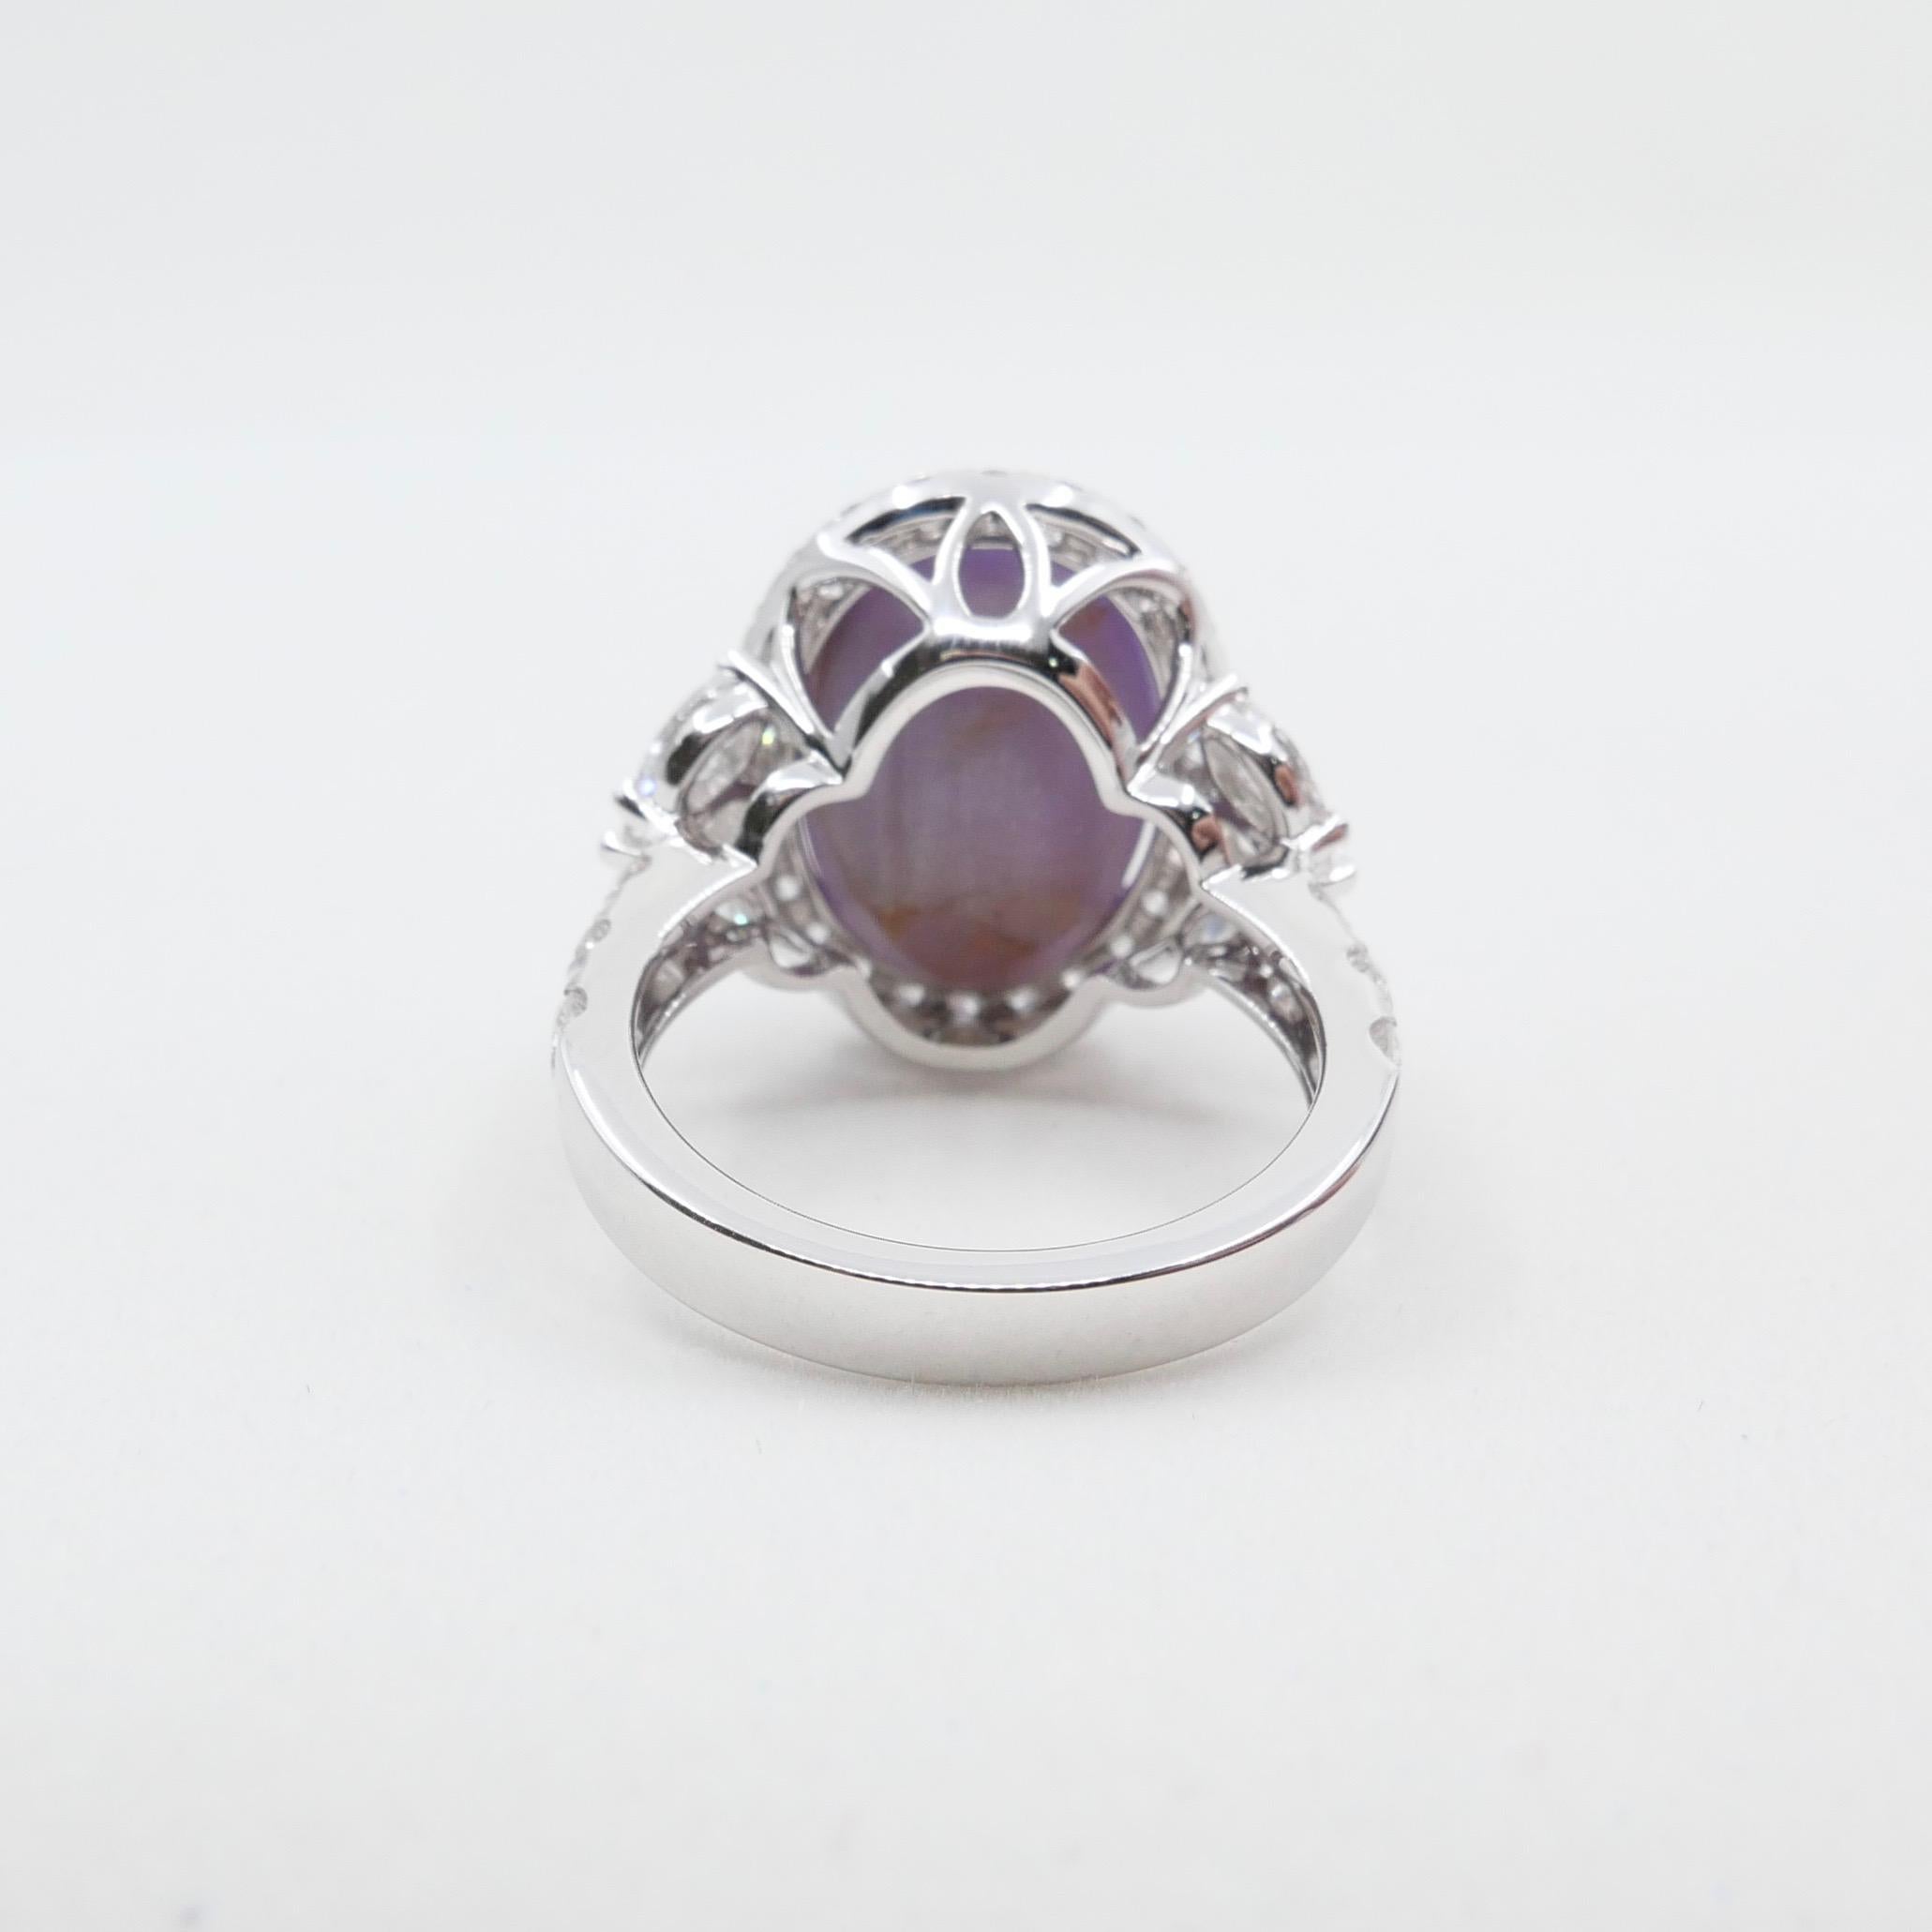 Certified Purple Star Sapphire 20.70 Carat Diamond Cocktail Ring, Statement Ring 4